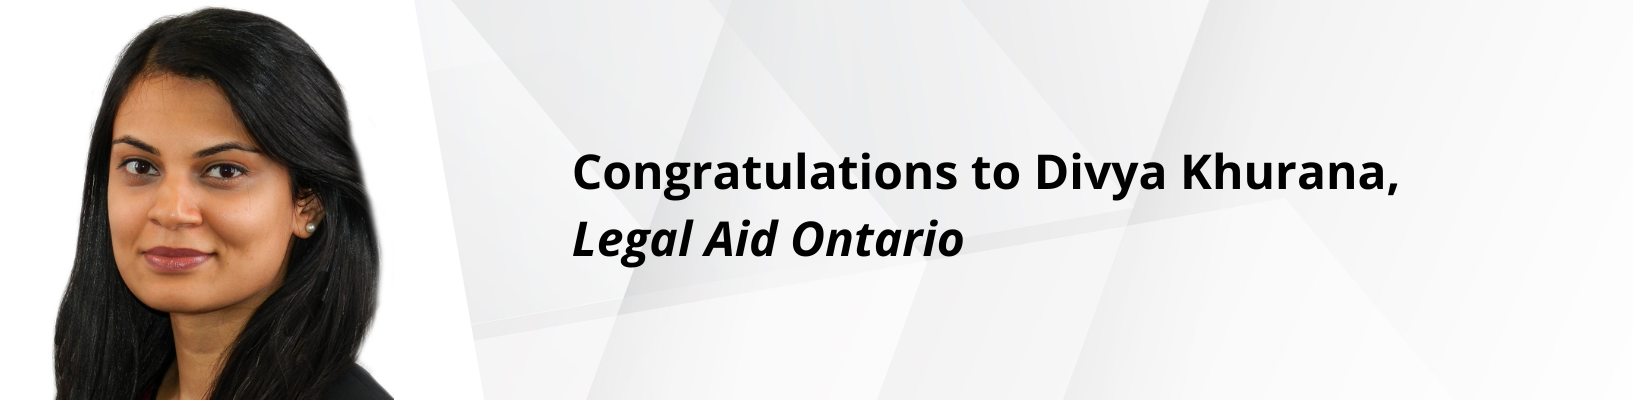 Congratulations to Divya Khurana, Legal Aid Ontario Winner Banner